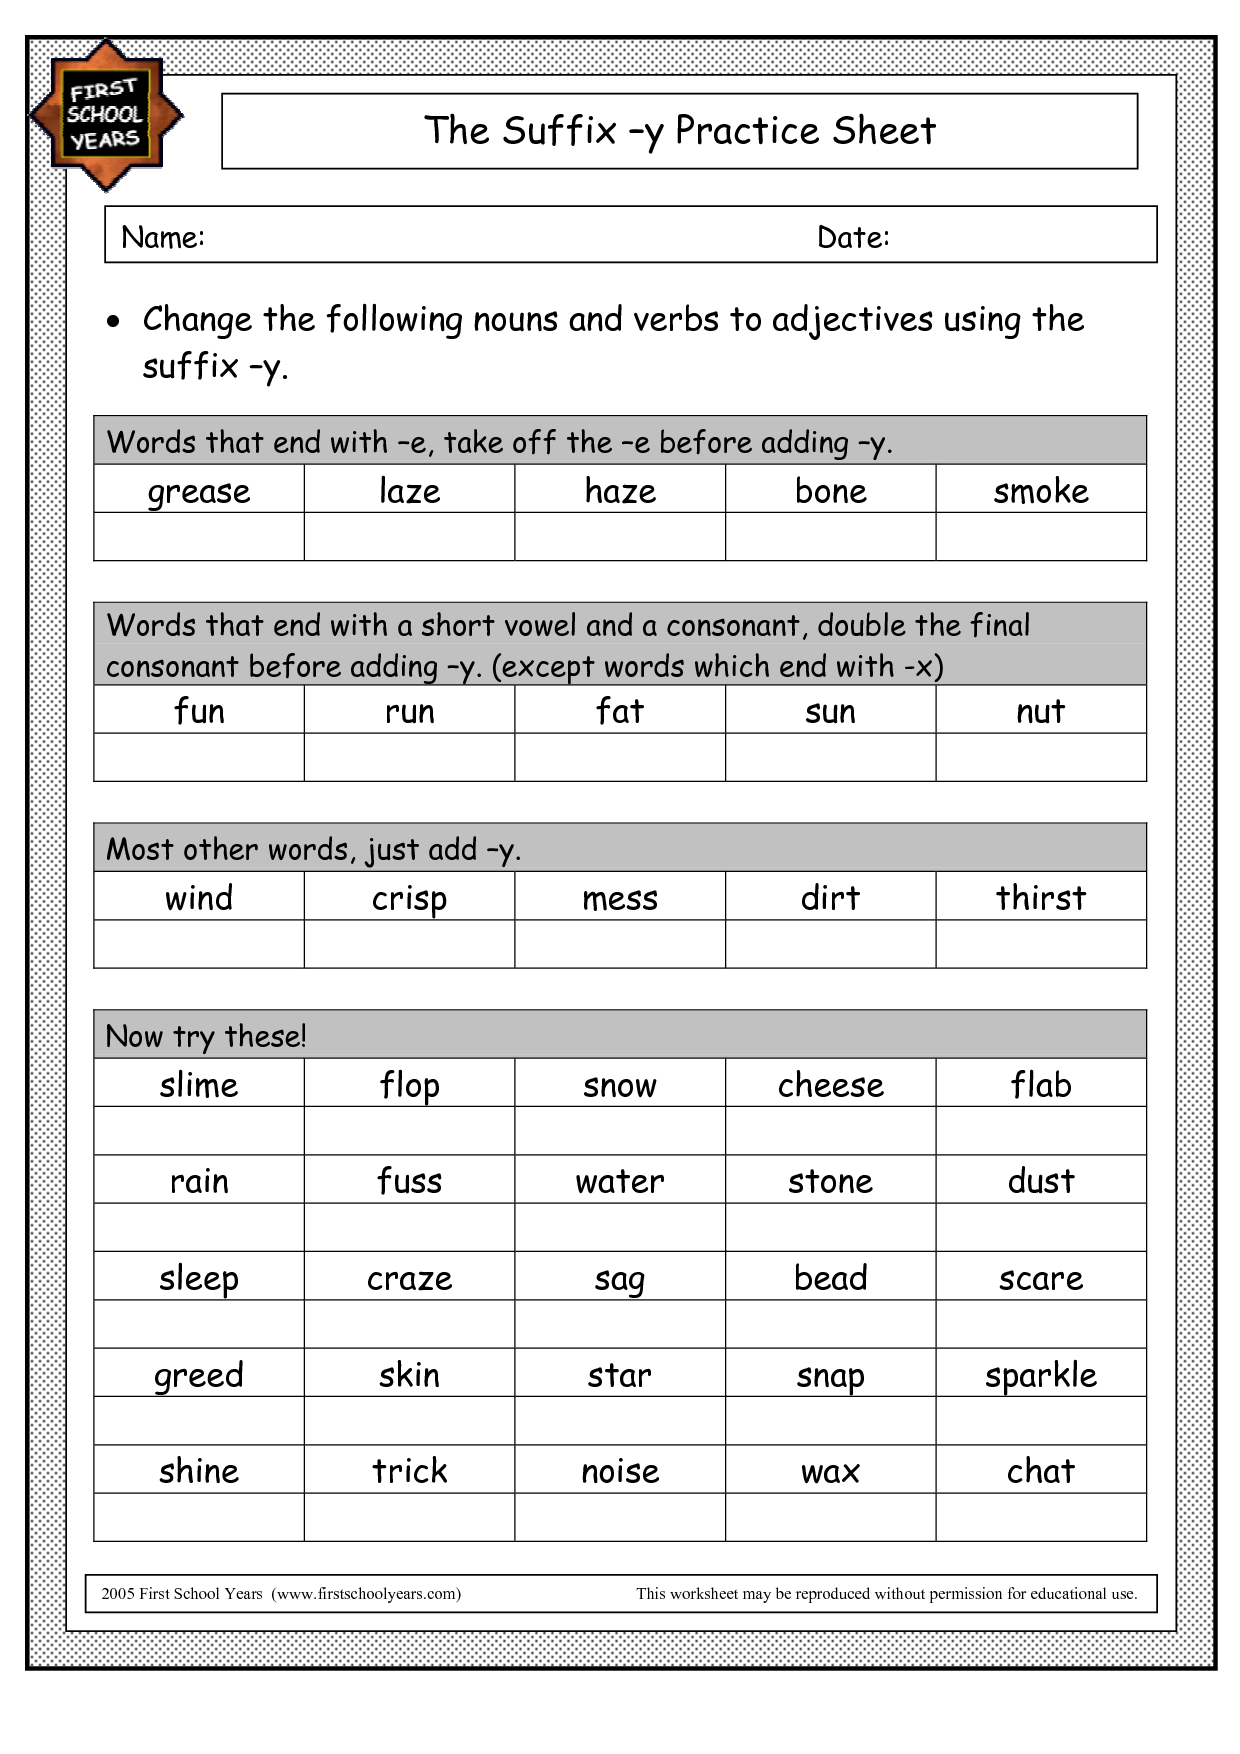 adding-suffixes-worksheet